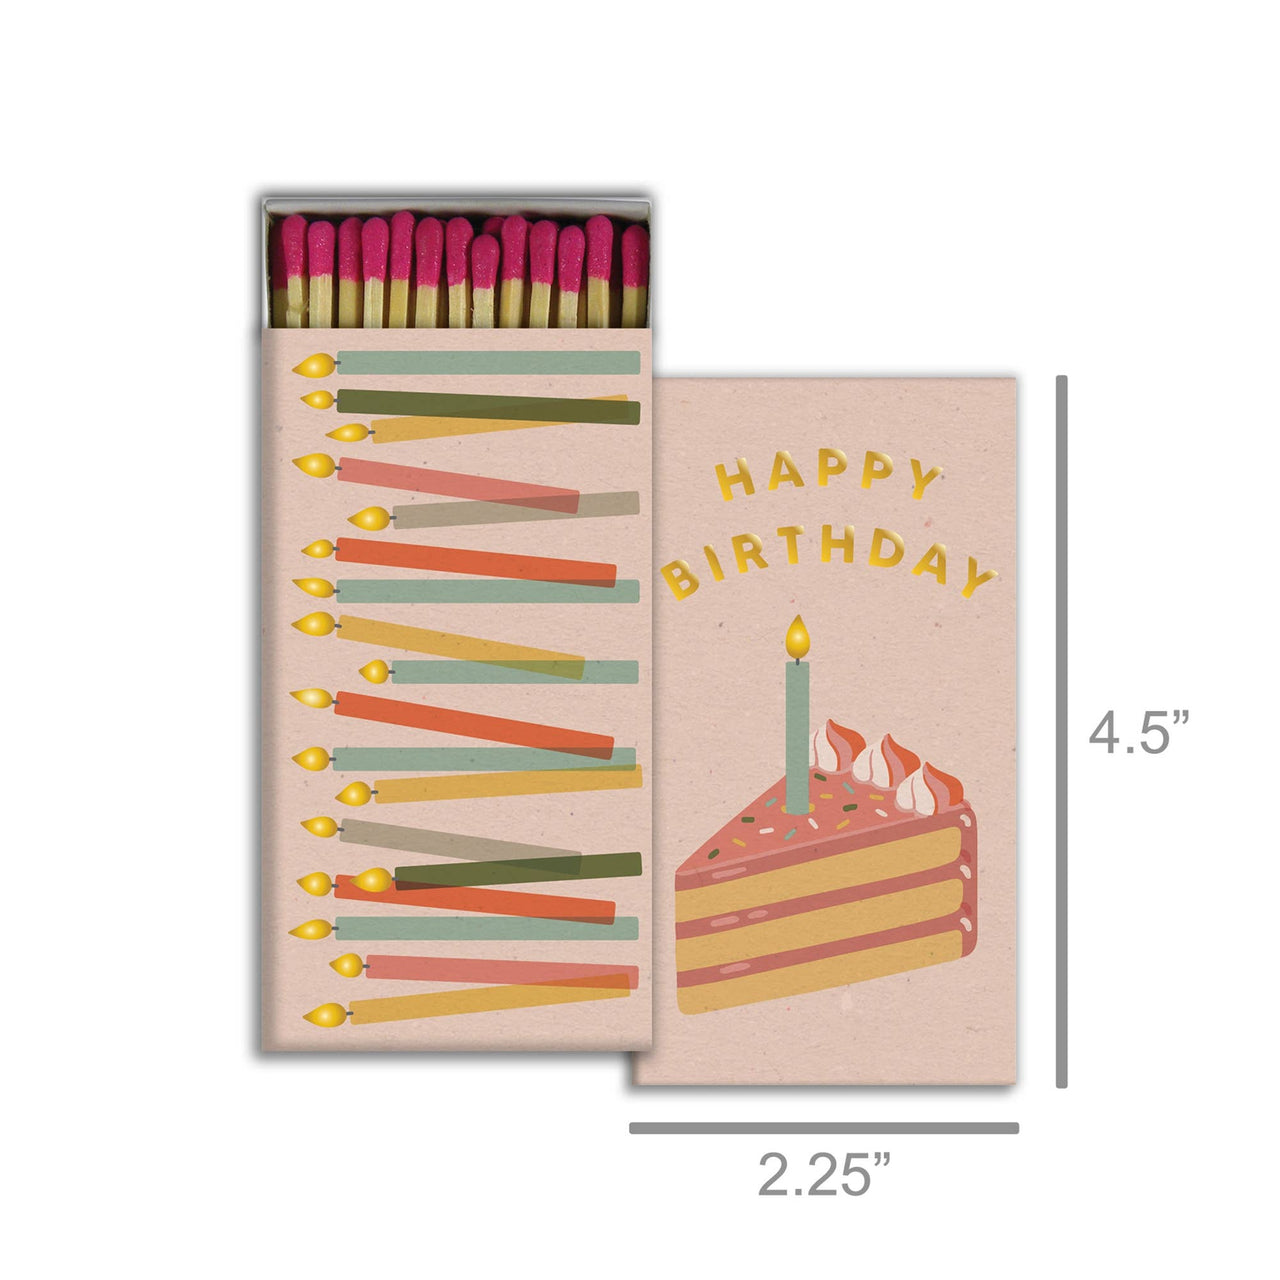 Matches - Birthday Wishes: Match Stick, Paper / Multi  HomArt   